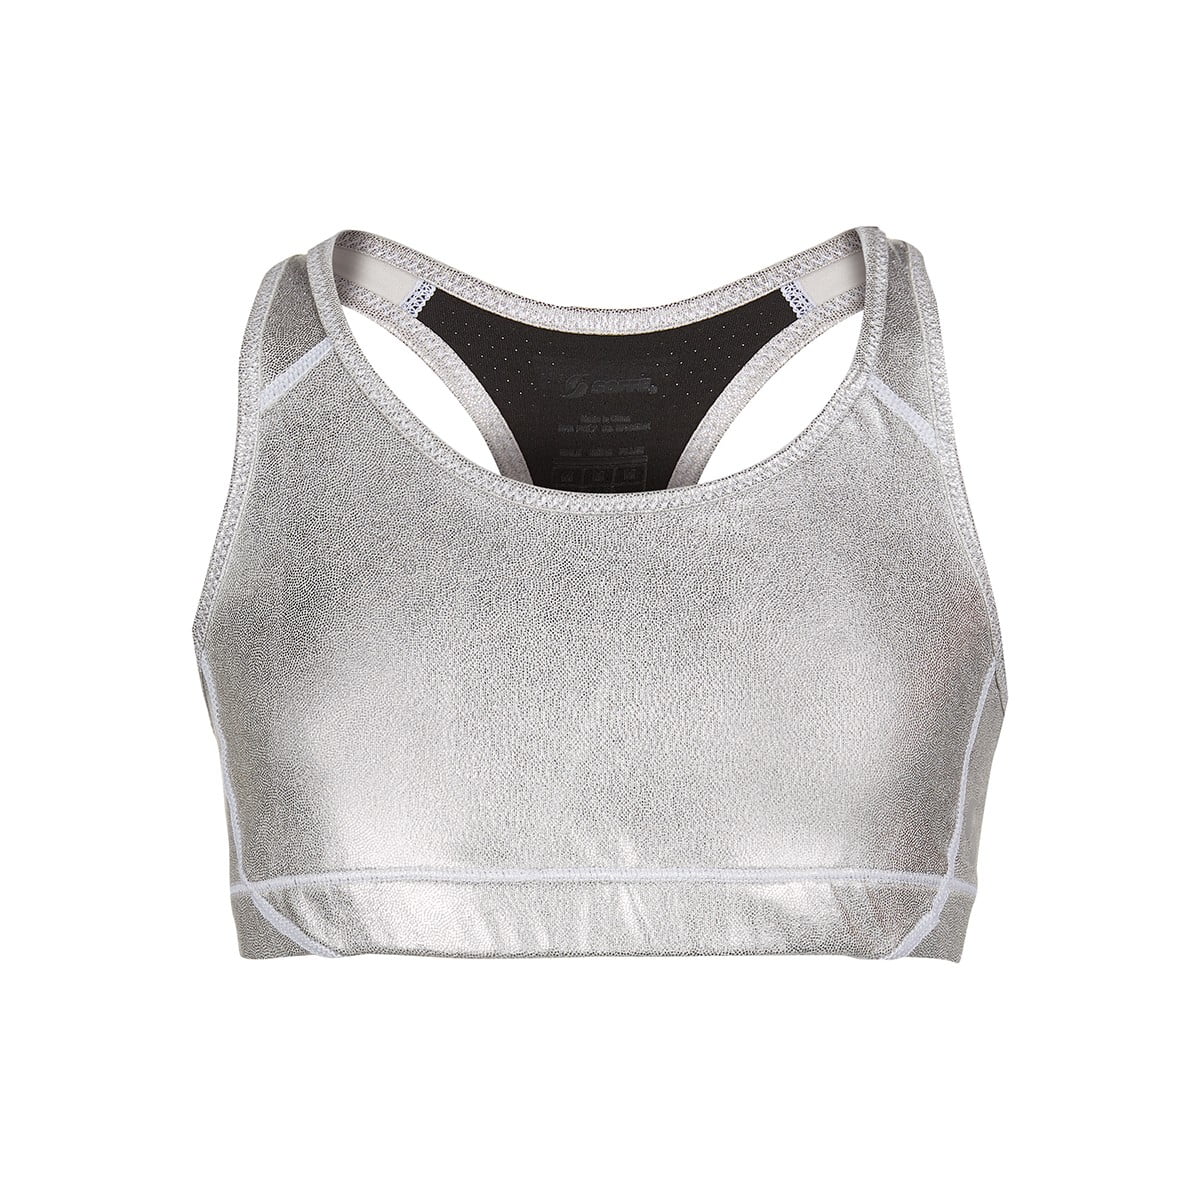 SUPER CUTE WOMEN'S Grey Sports Bra Size M 34 Zone Pro AWESOMENESS! $2.39 -  PicClick